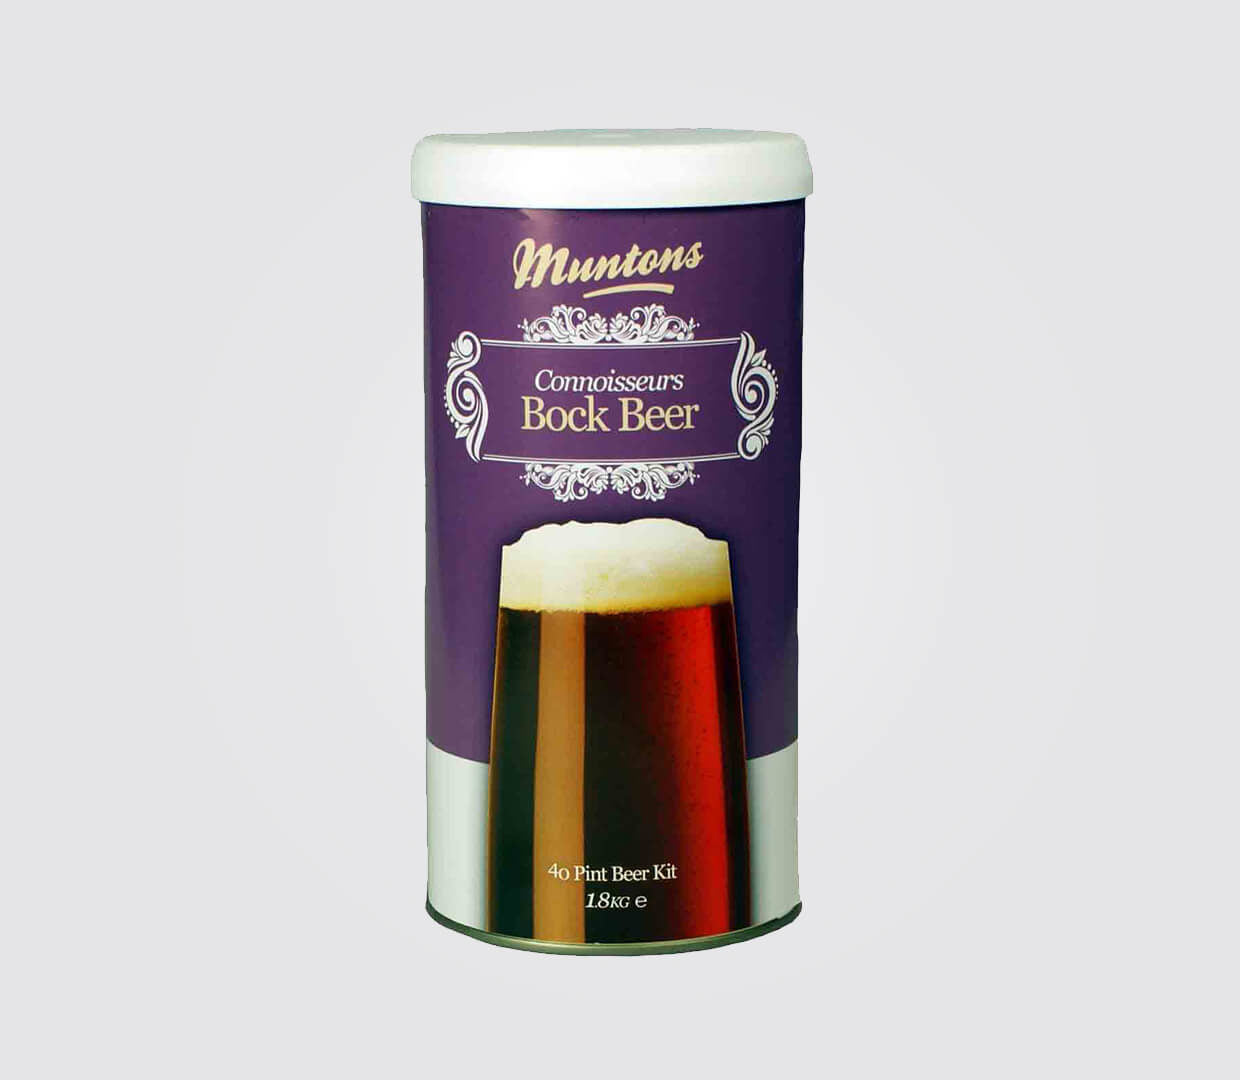 Muntons Connoisseurs Range Bock Beer 1.8kg - All Things Fermented | Home Brew Shop NZ | Supplies | Equipment